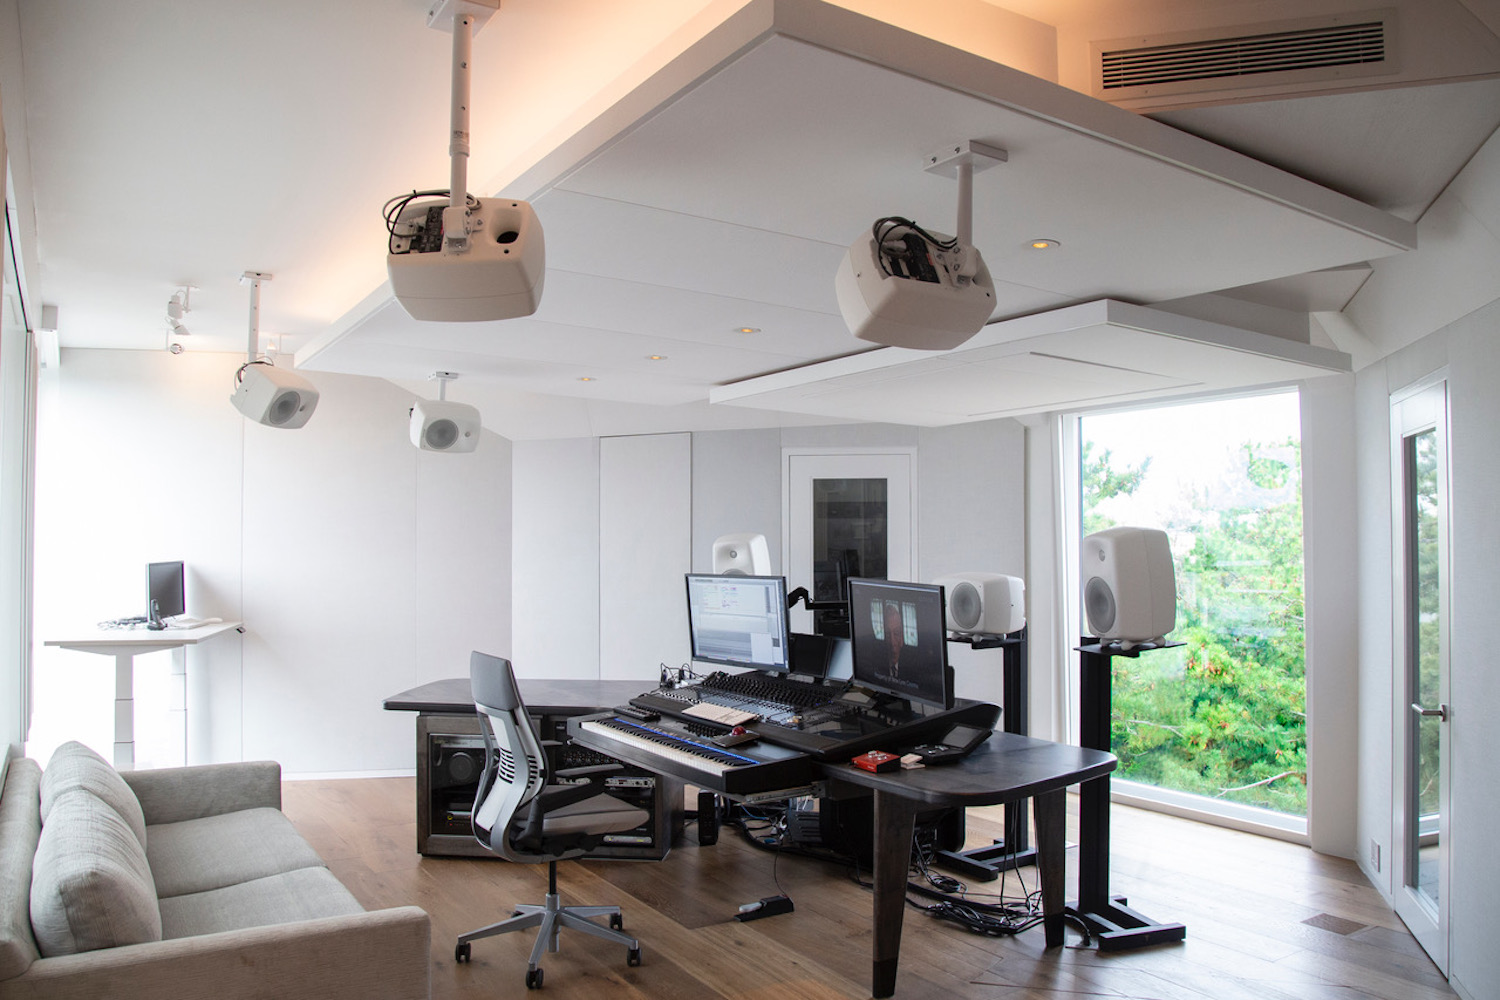 Carter Burwell Studio, designed by WSDG, one of WSDG's new E-Studio format recording studio.